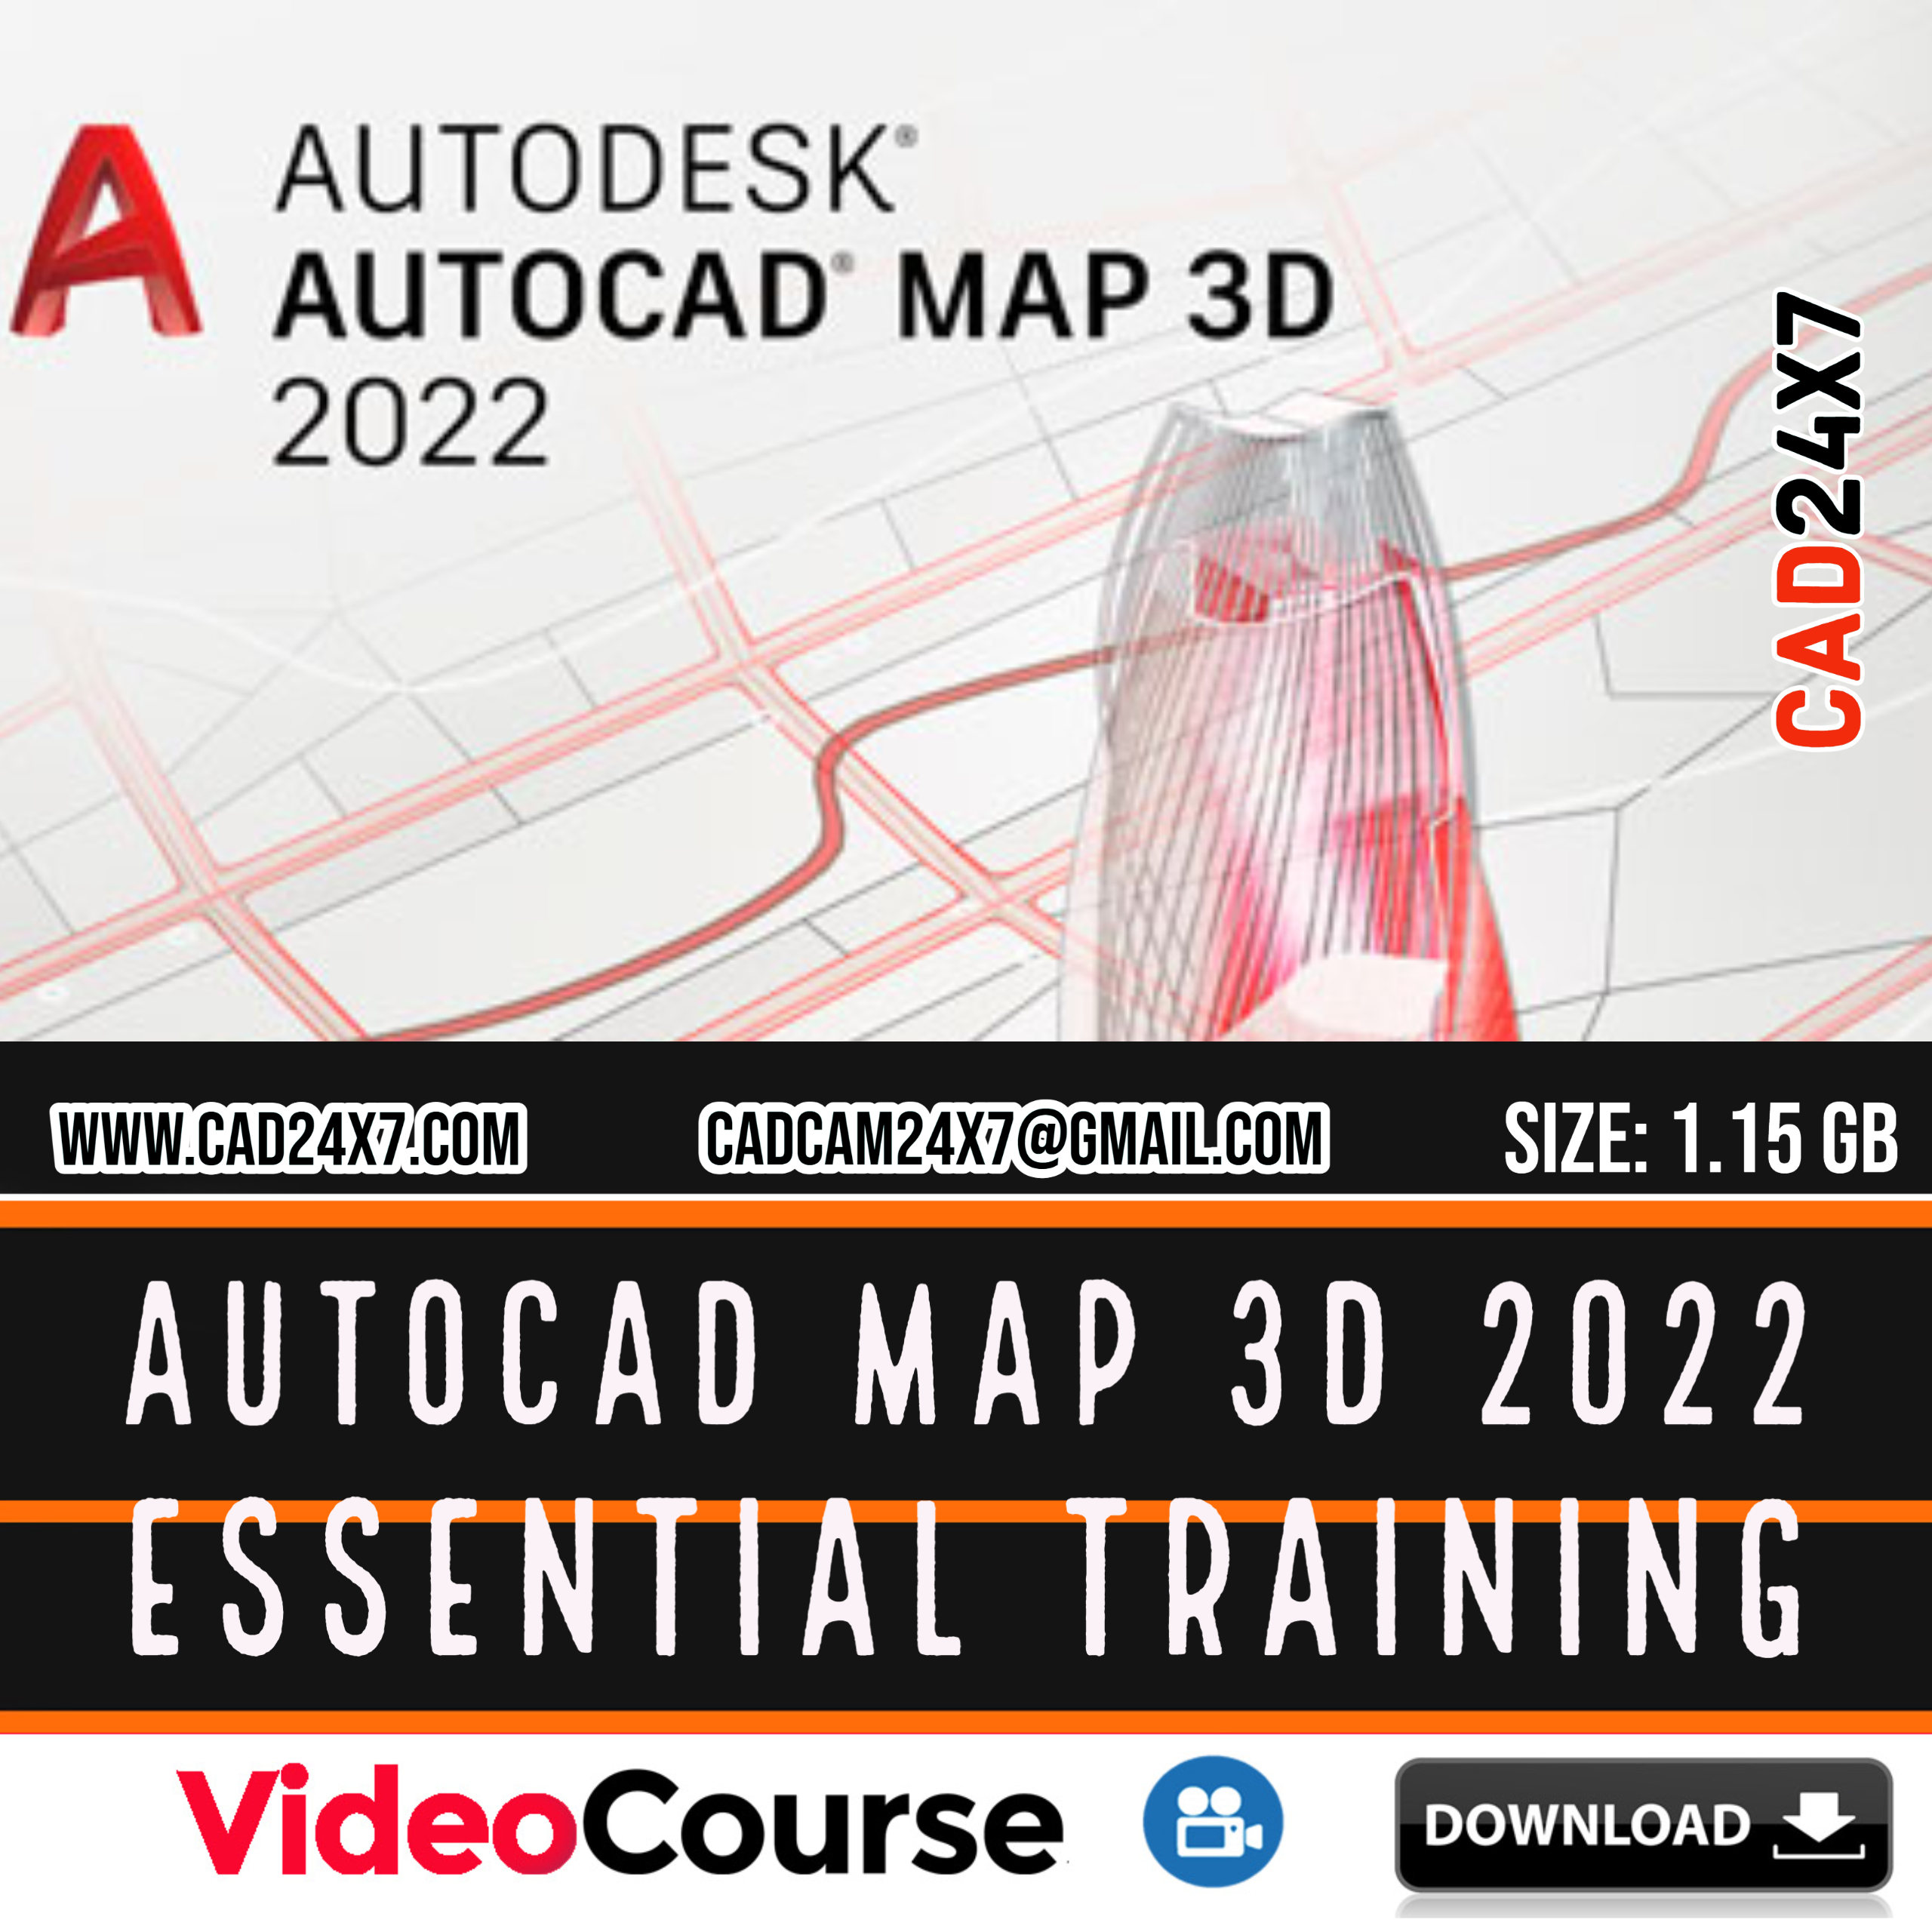 AutoCAD Map 3D 2022 Essential Training